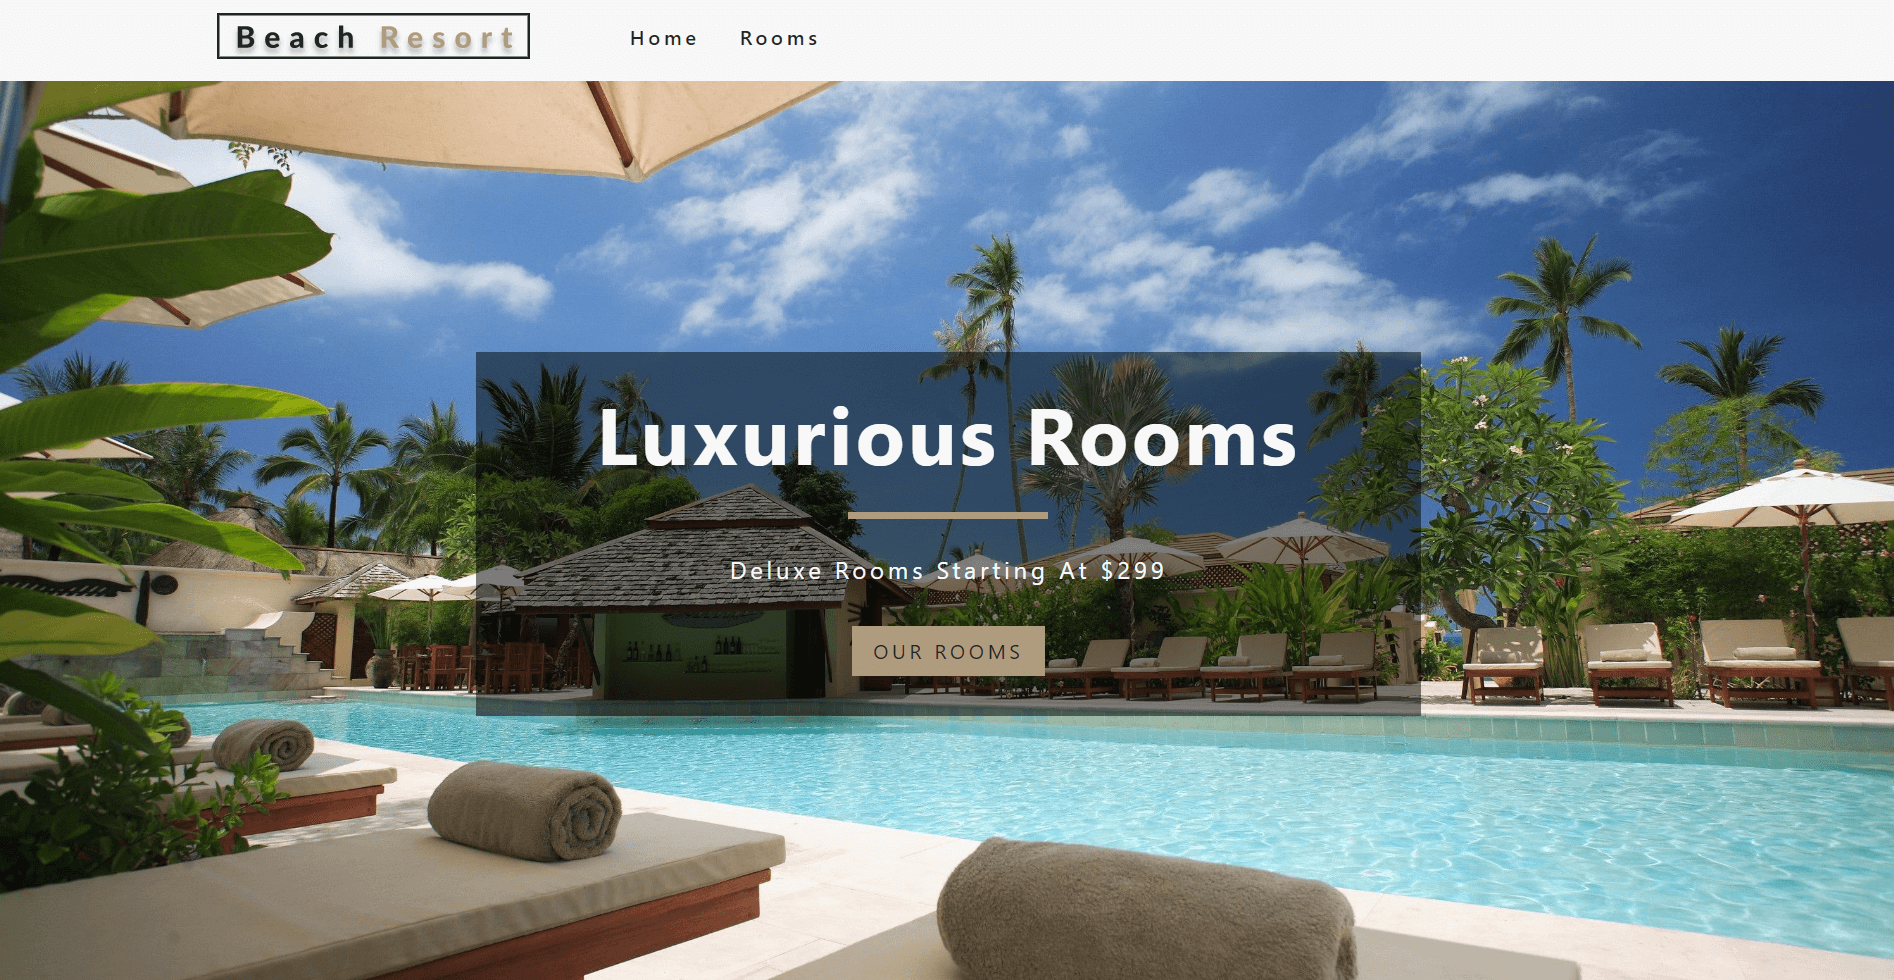 Beach Resort (Hotel Room Booking System)